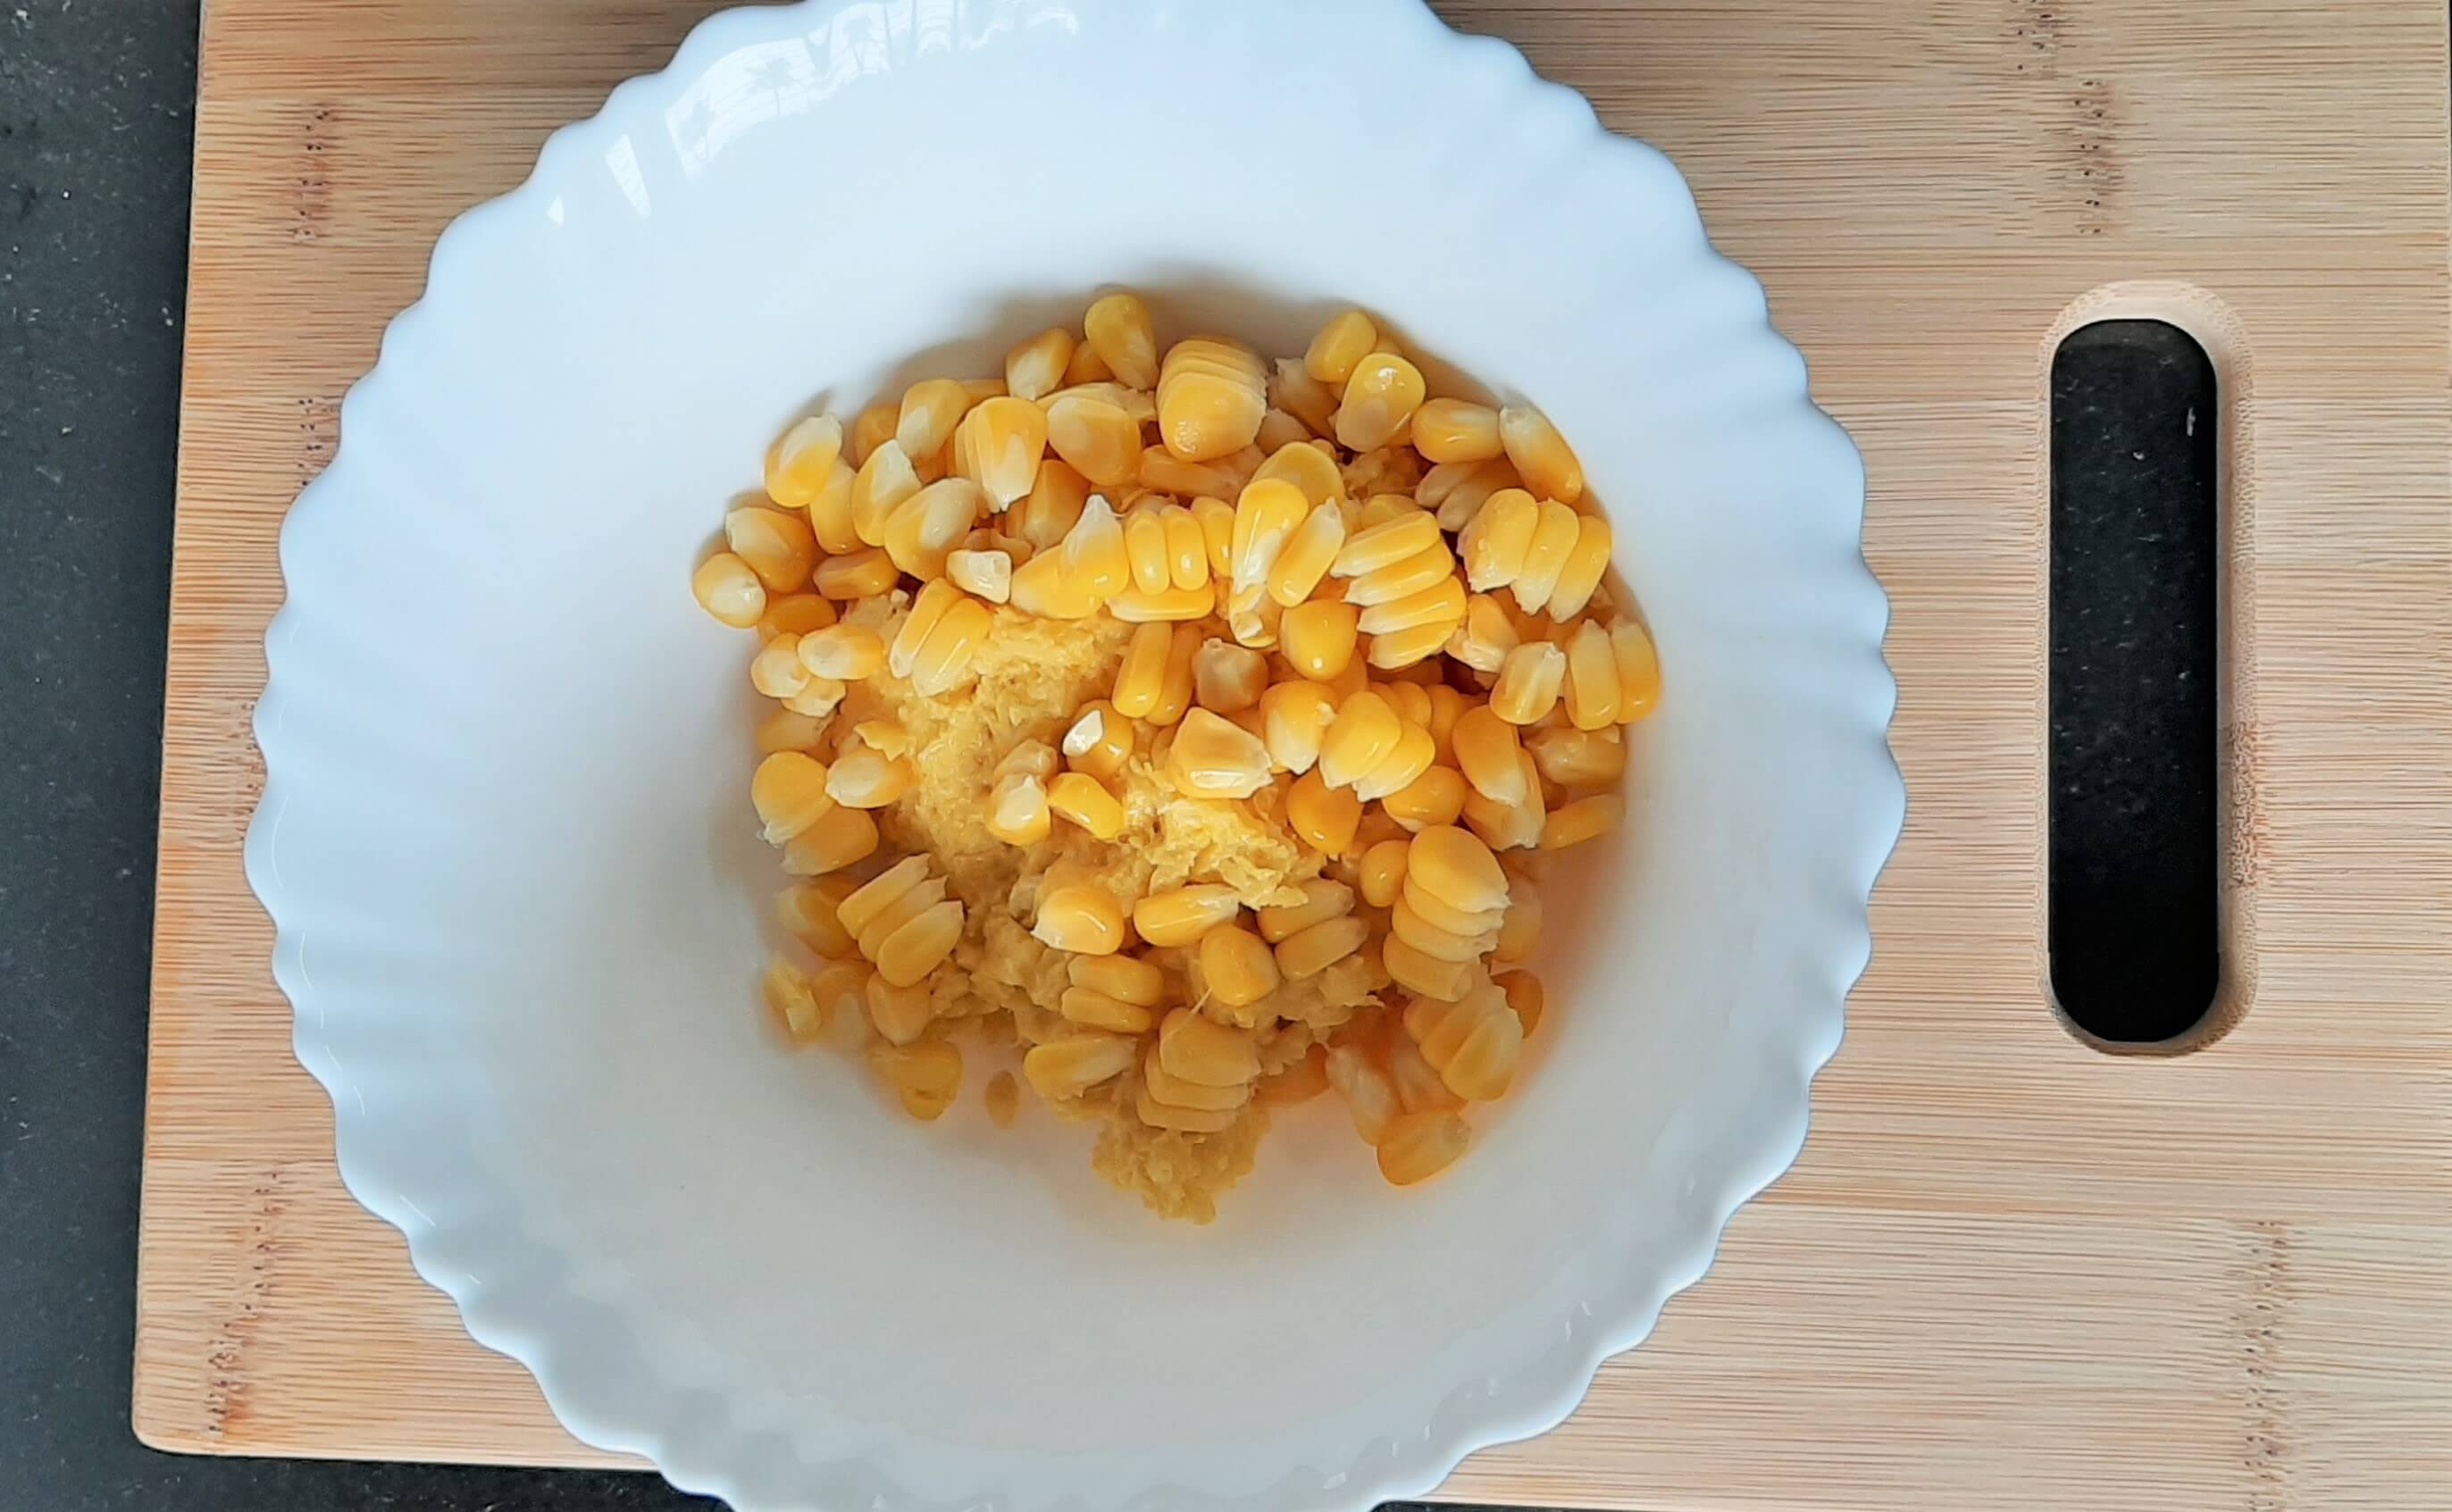 Corn kernels with groud corn